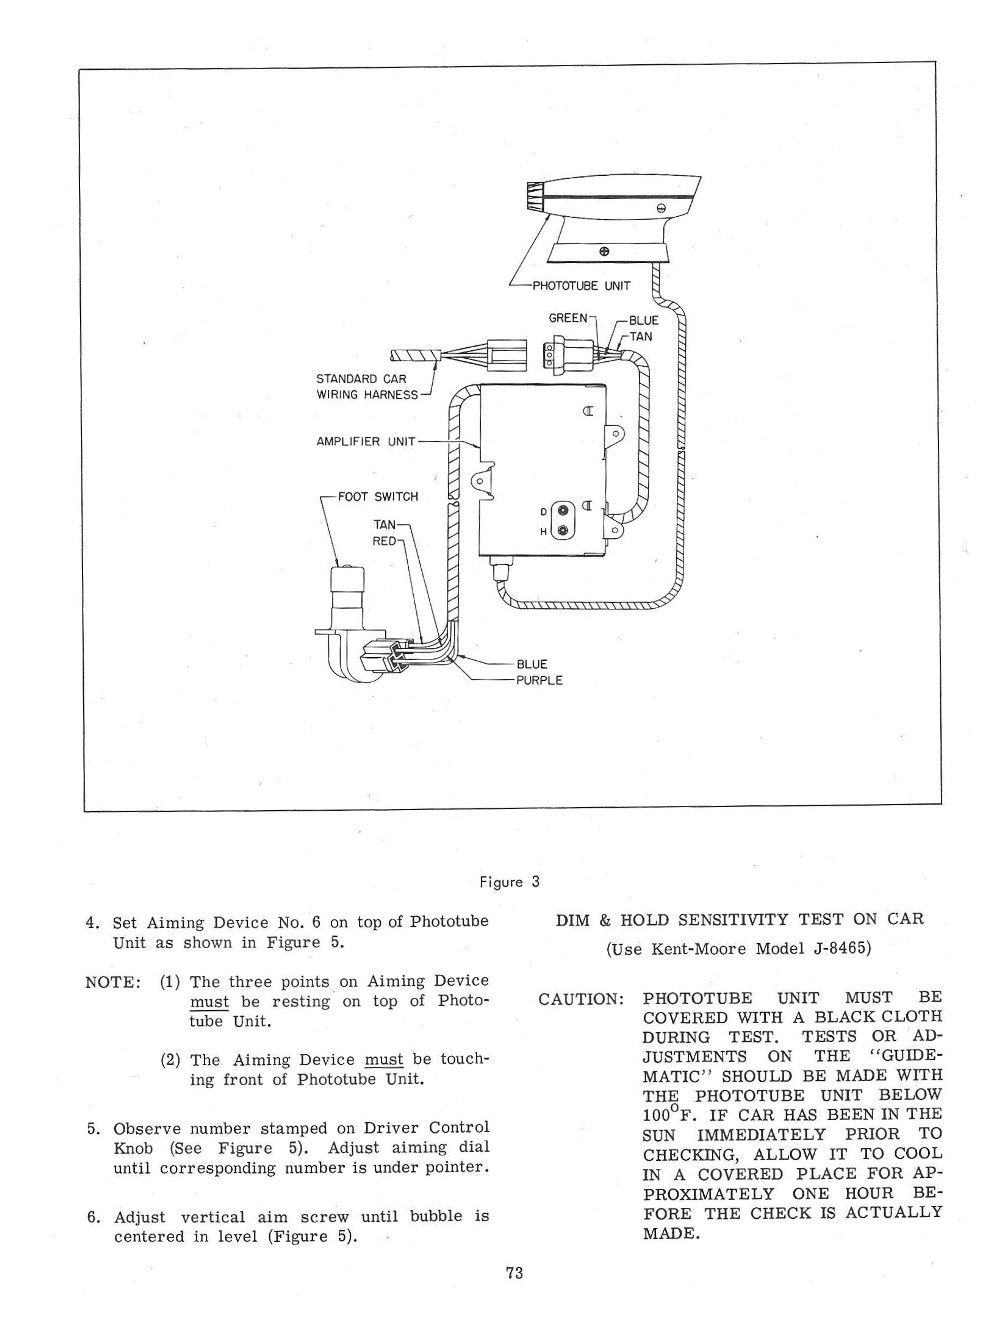 1960 Chevrolet Radio Service and Shop Manual